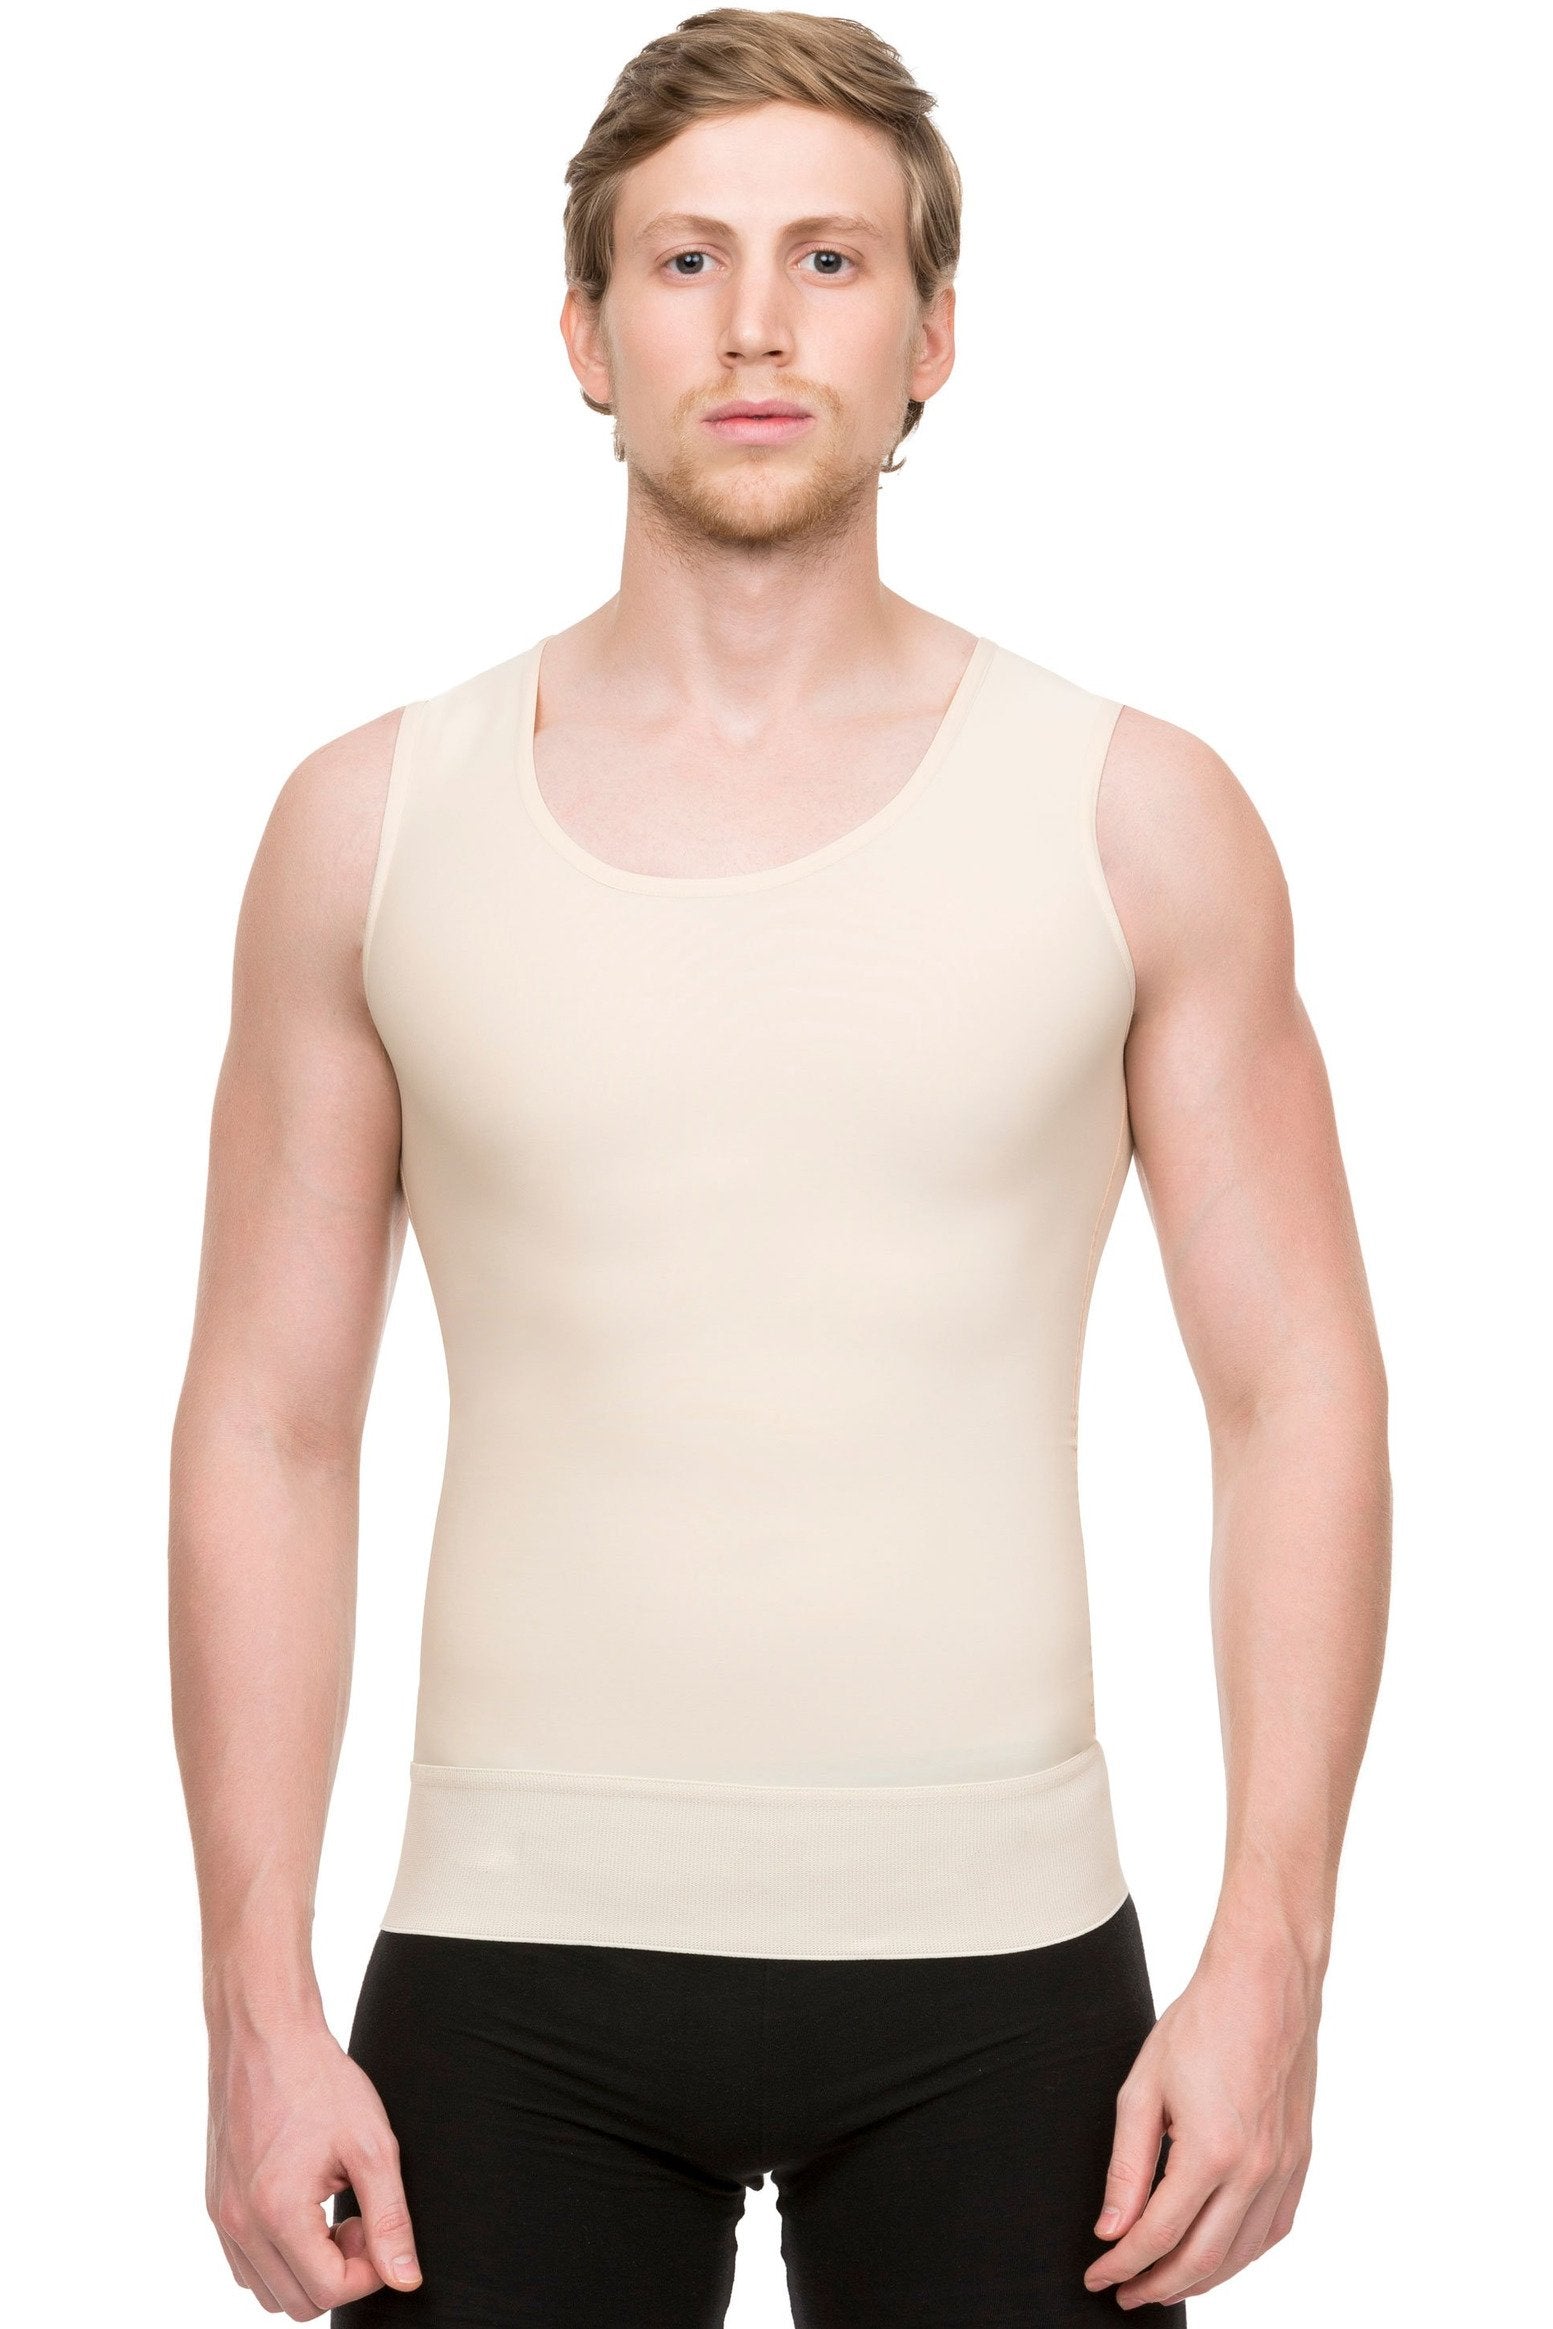 Power Slender Camiseta Reductora Hombre o Mujer - Inicio -  -  WEB OFICIAL